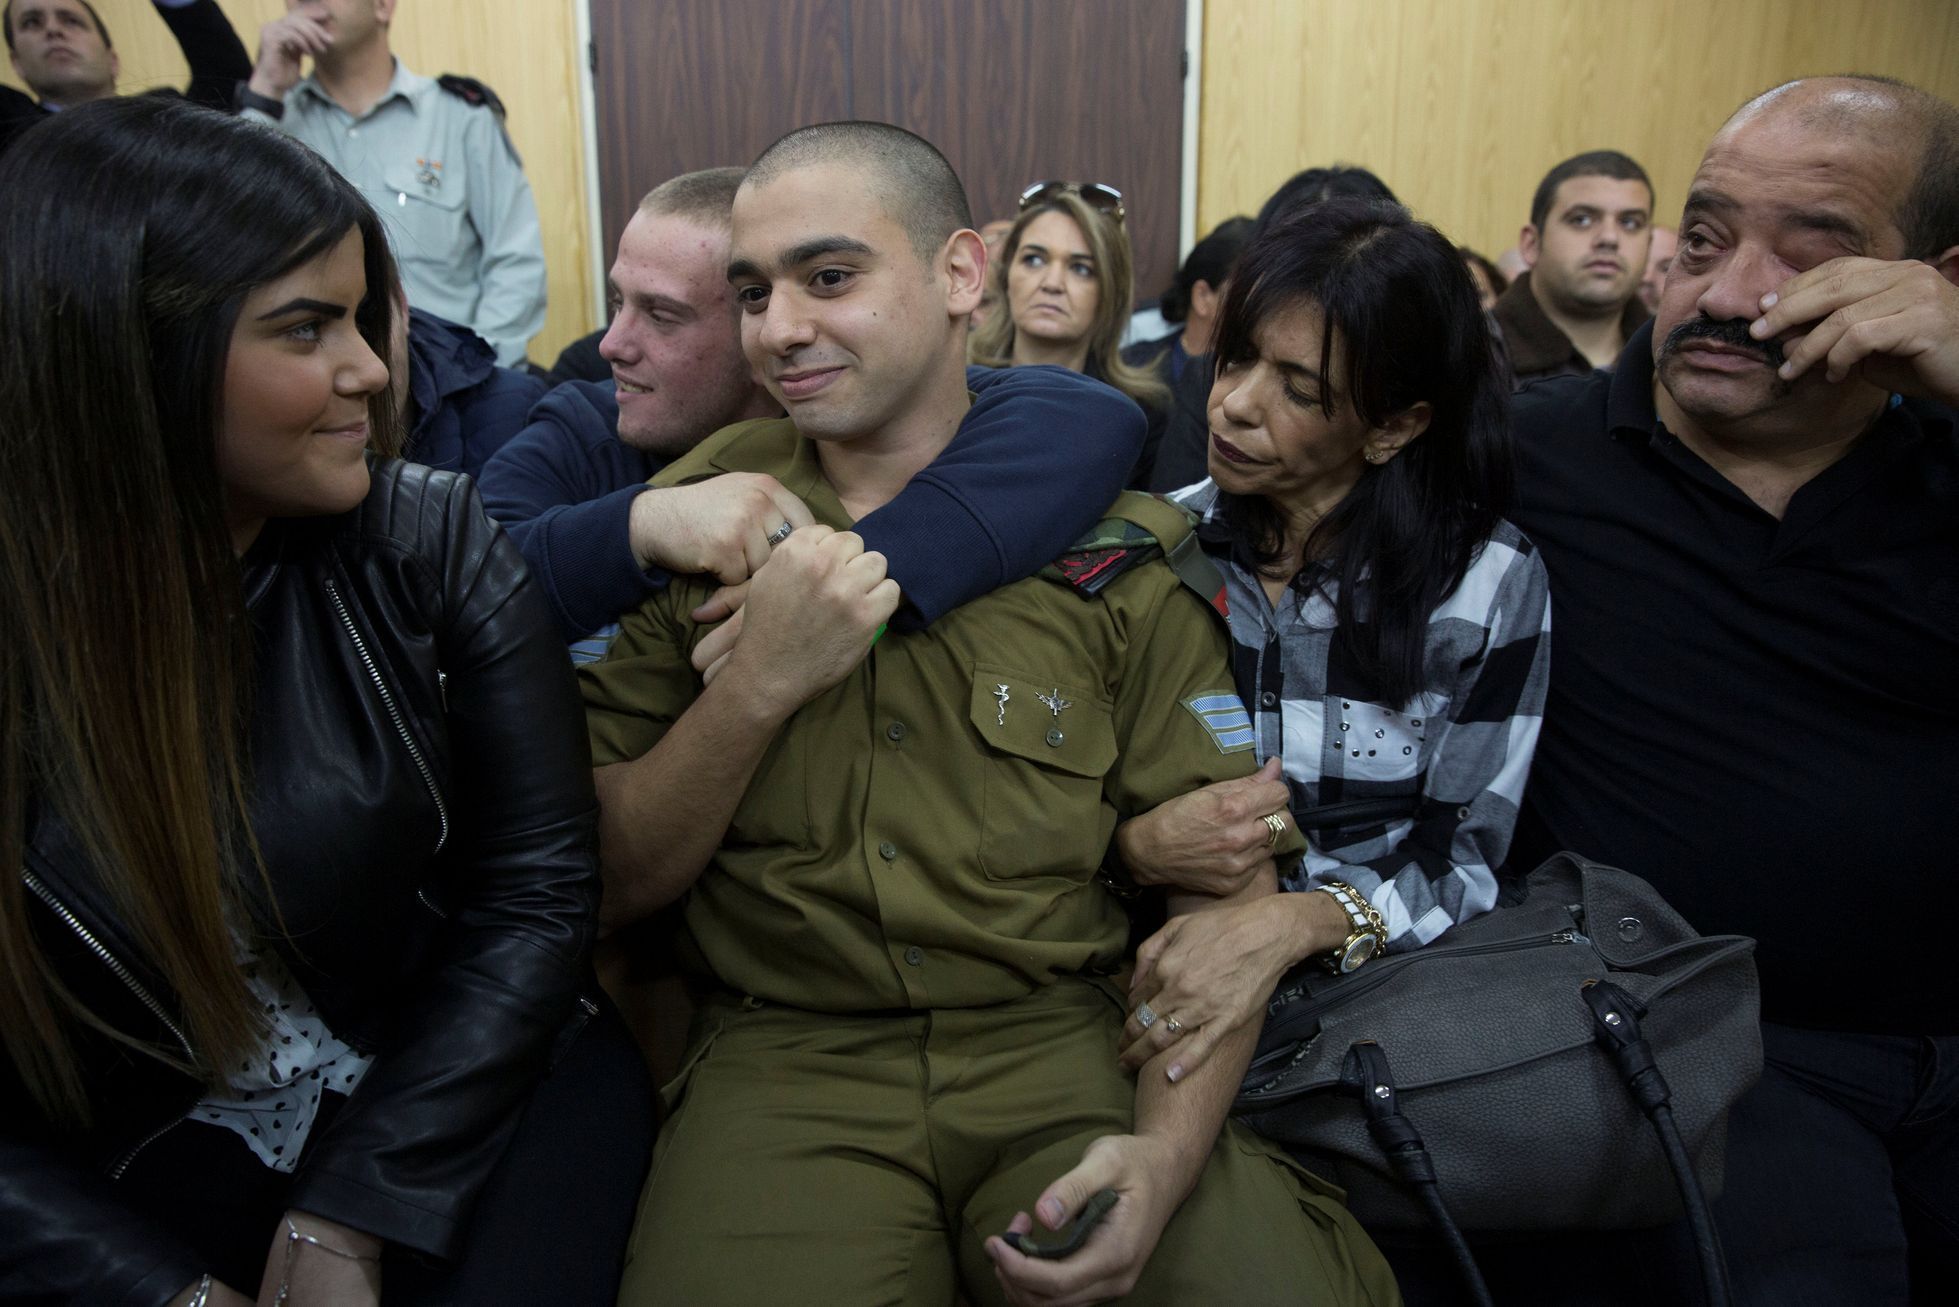 Izraelský voják Elor Azaria si vyslechl u soudu verdikt.